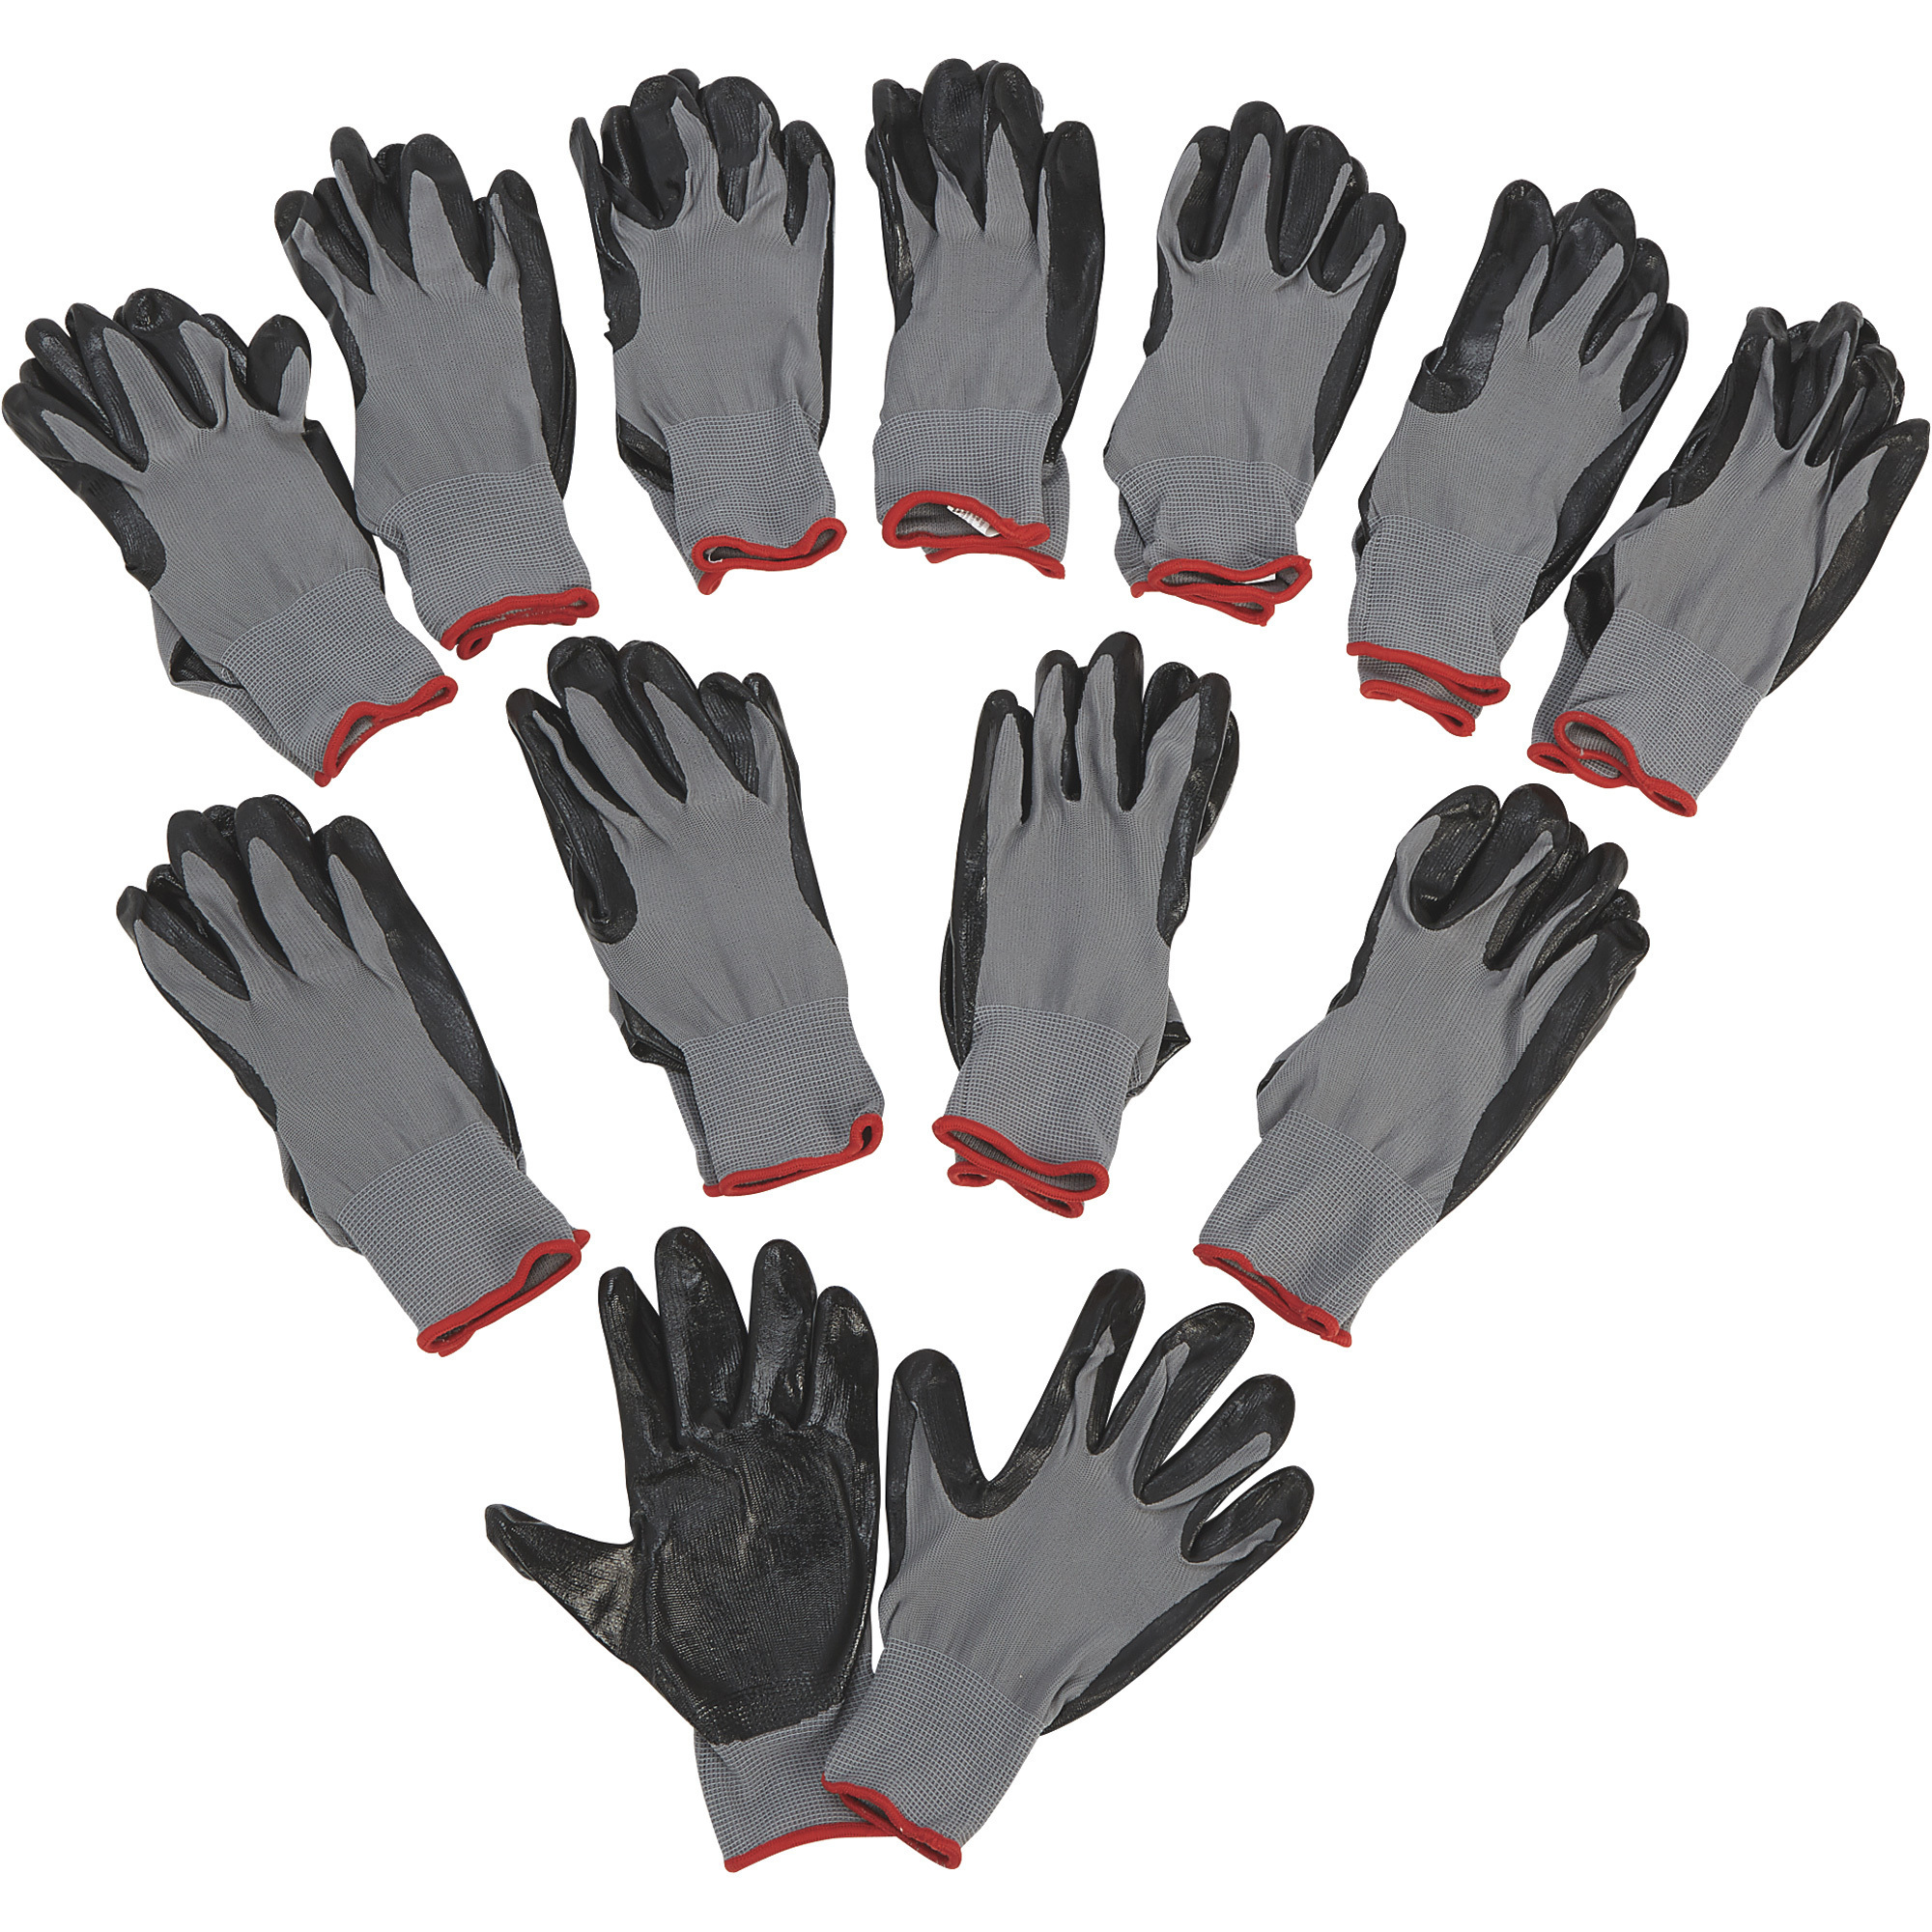 Ironton Nitrile-Coated Work Gloves, 12 Pairs, Black, Large, Model 37130IR-L12